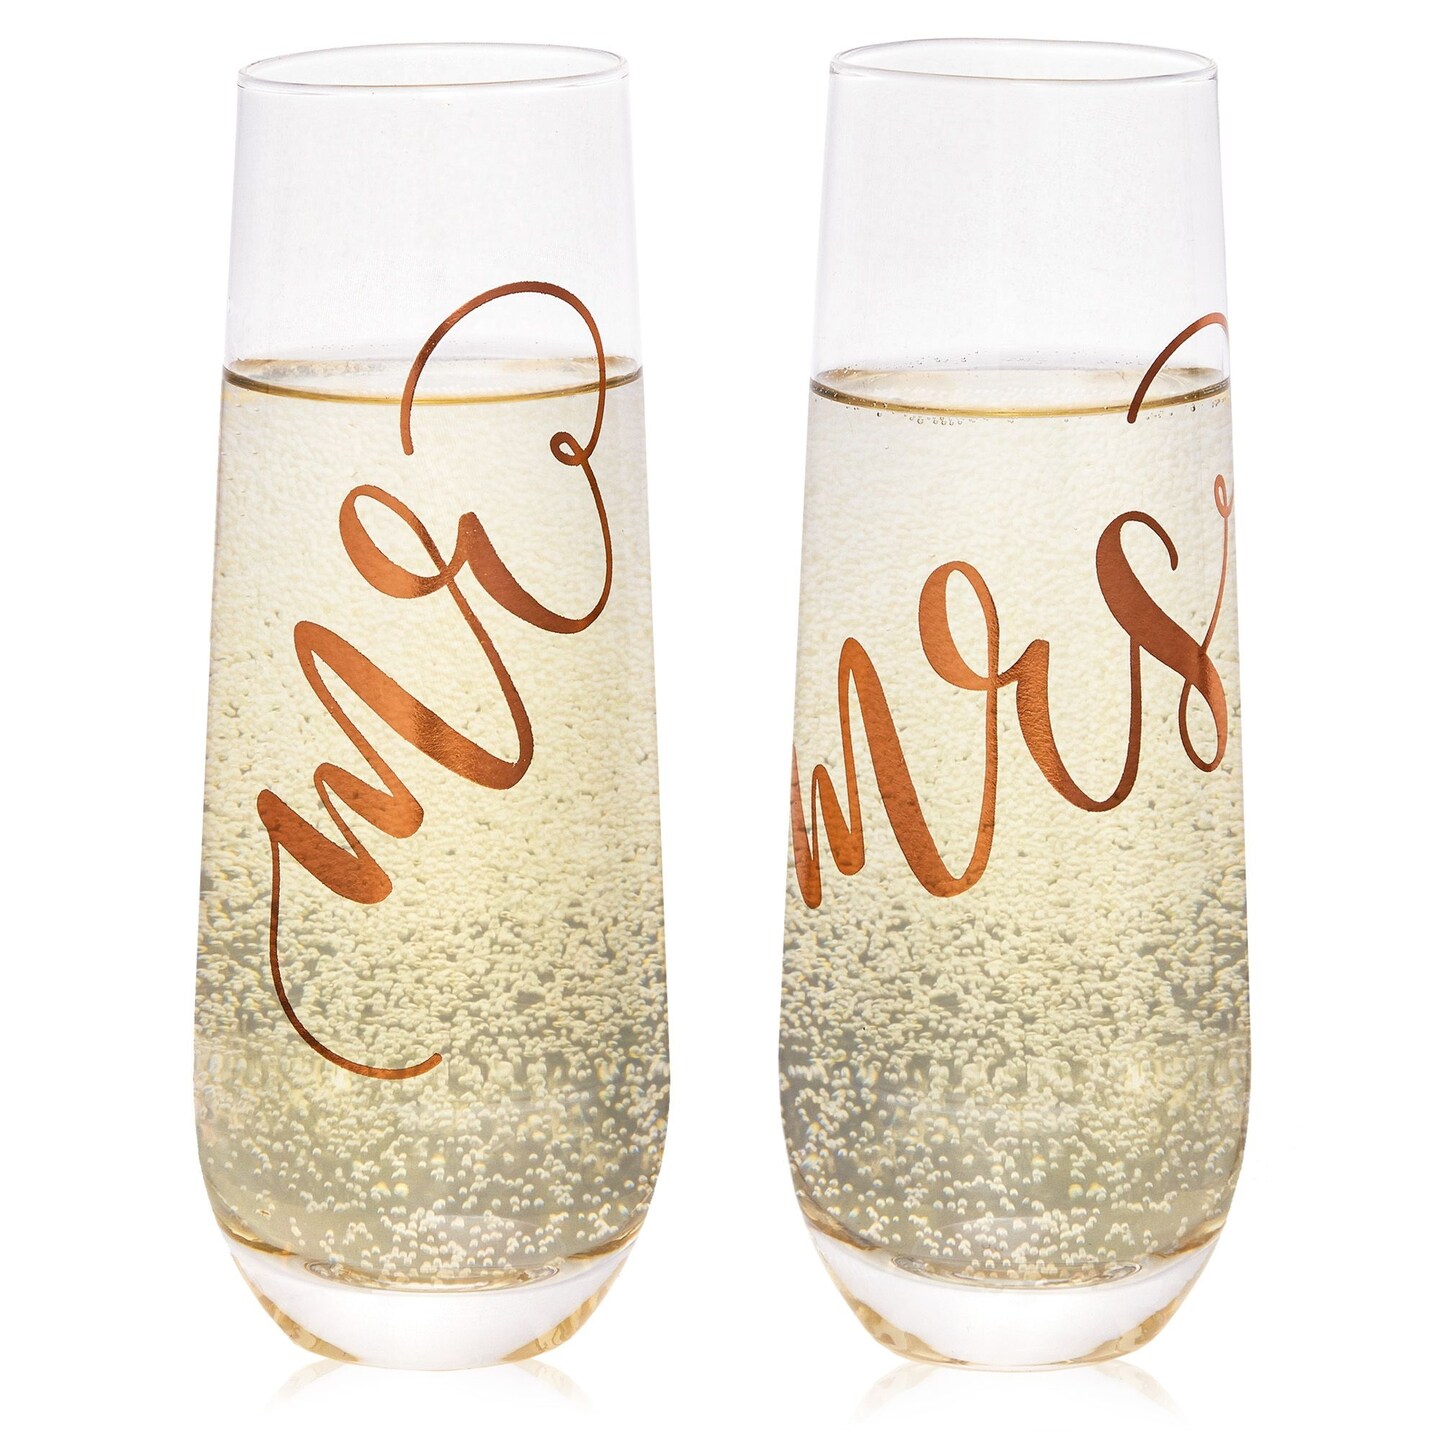 Mr. & Mrs. Dried Floral Wine Glasses > Toasting Flutes